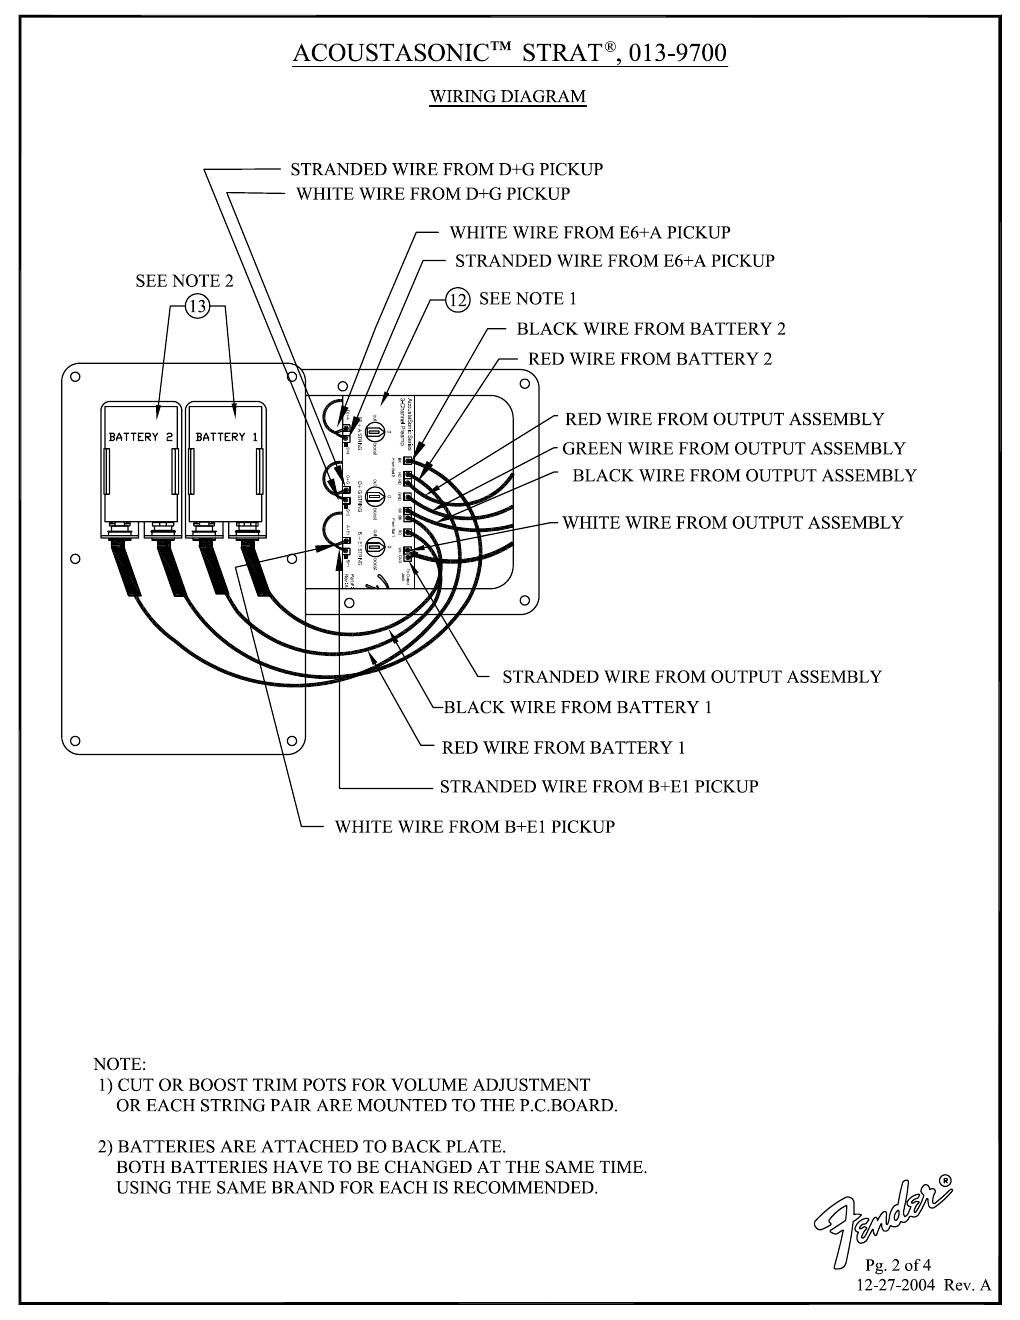 fender acoustasonic strat wiring diagram